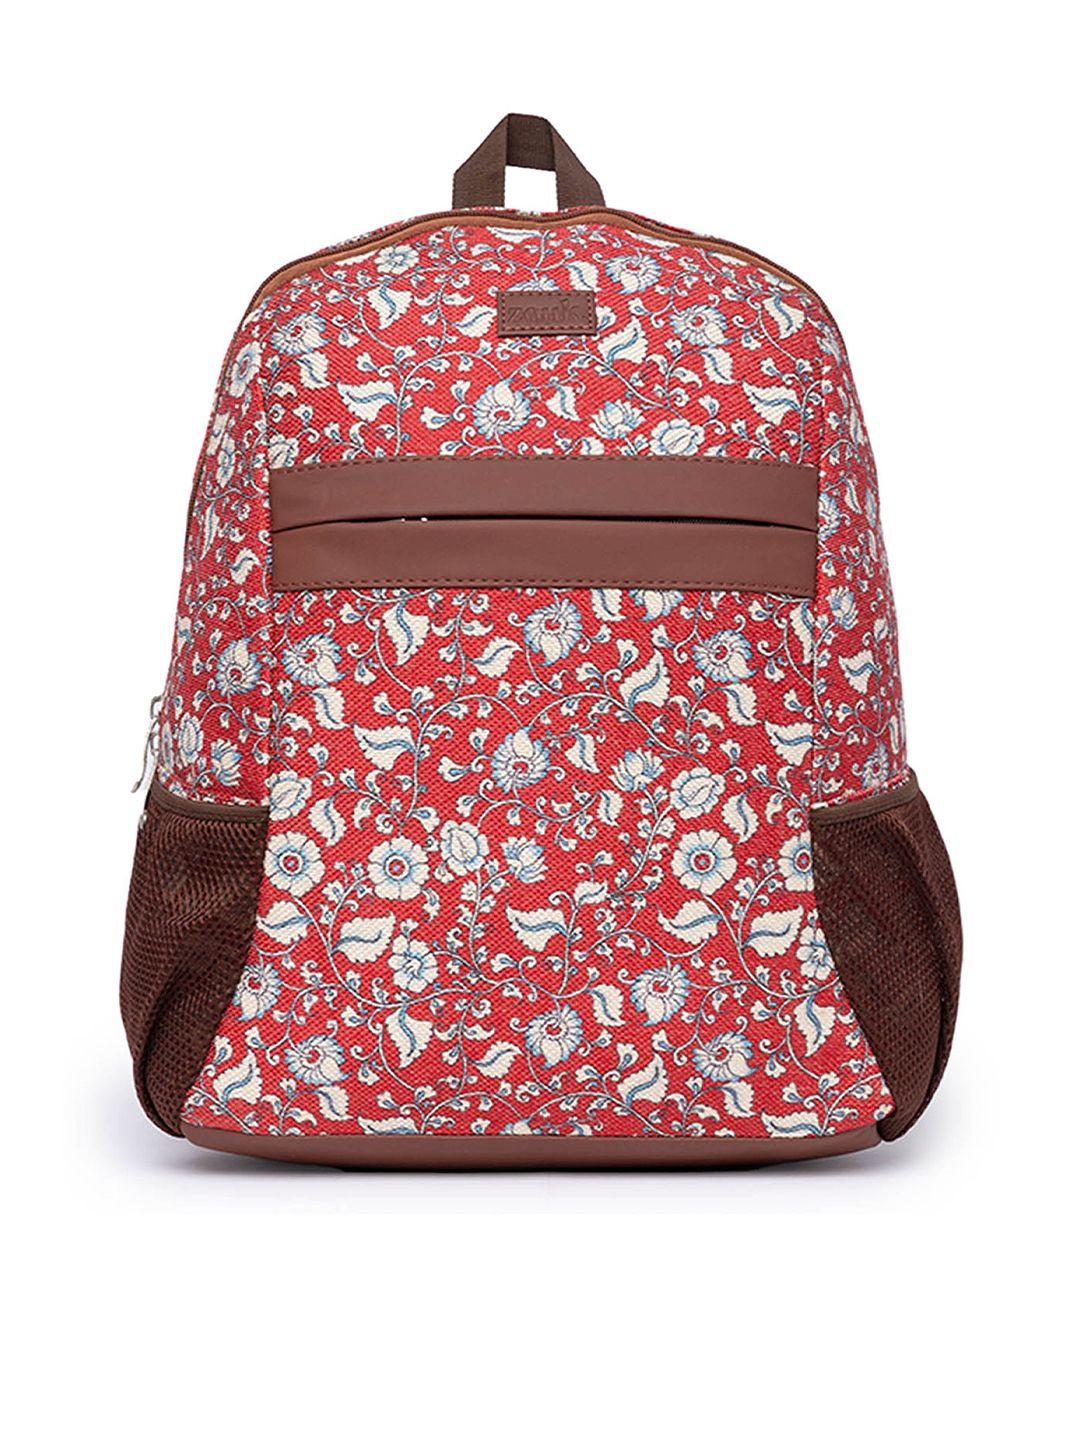 zouk women floral printed vegan leather laptop backpack